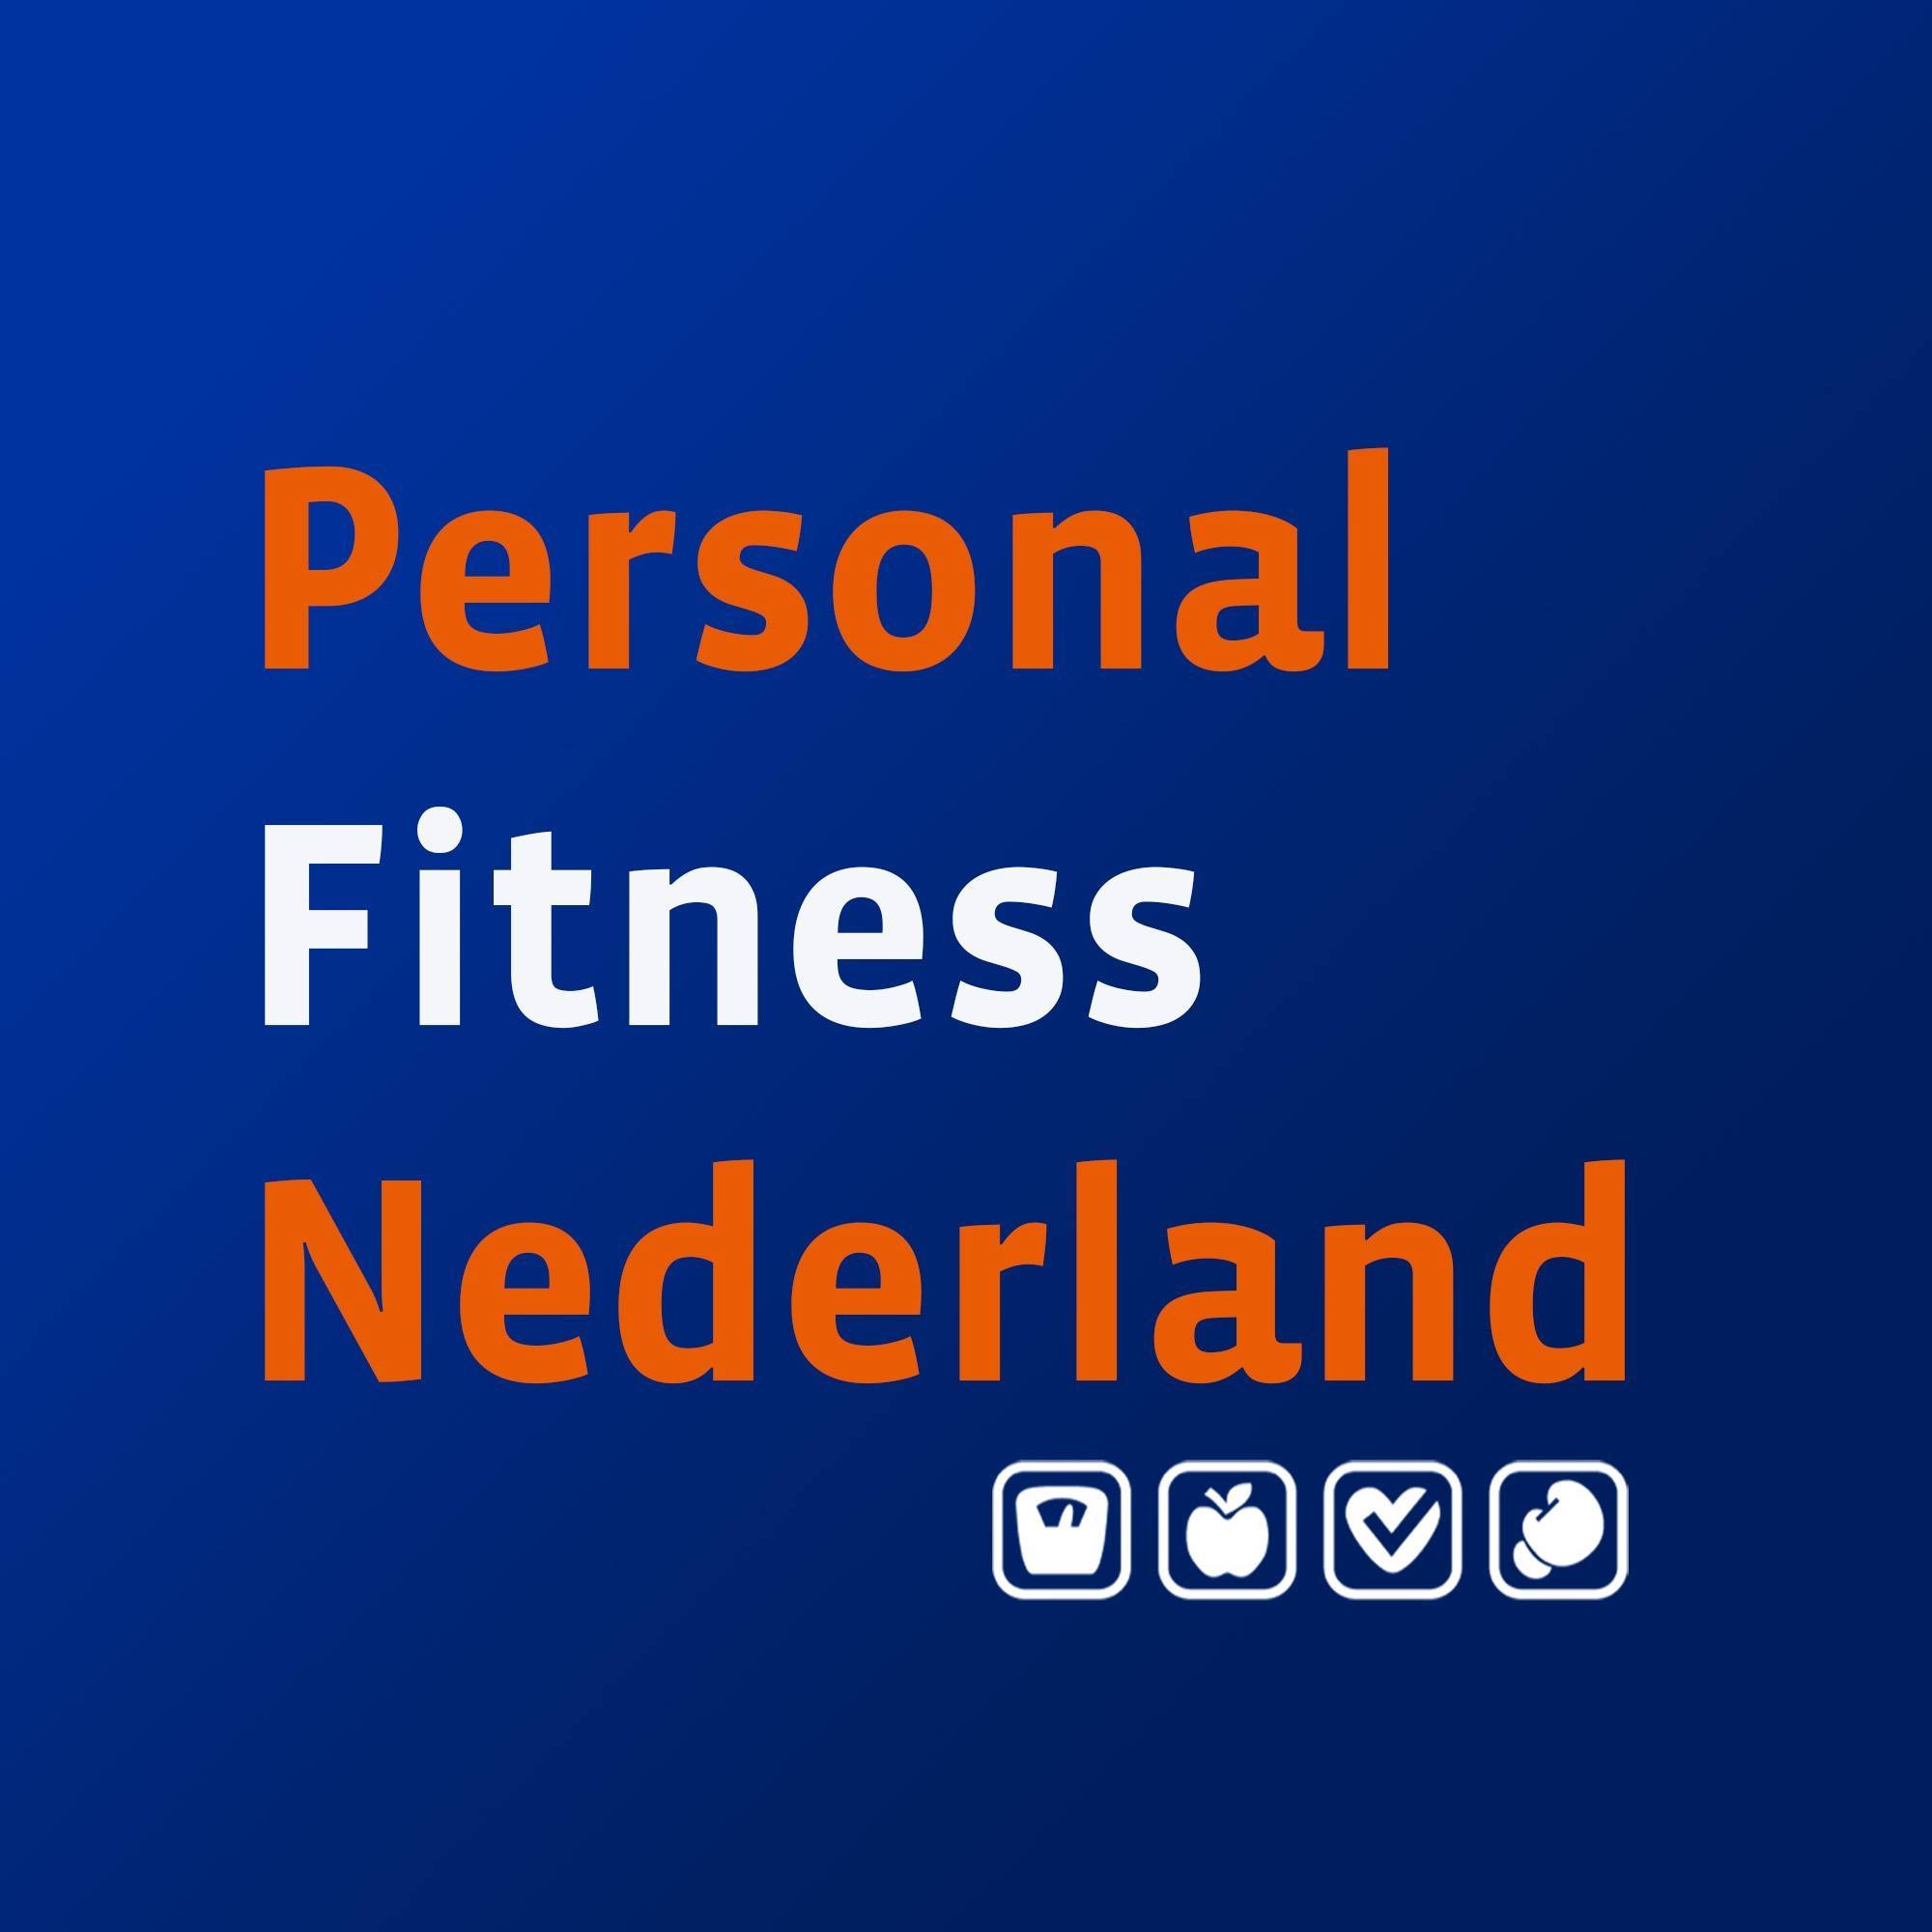 Personal fitness nederland